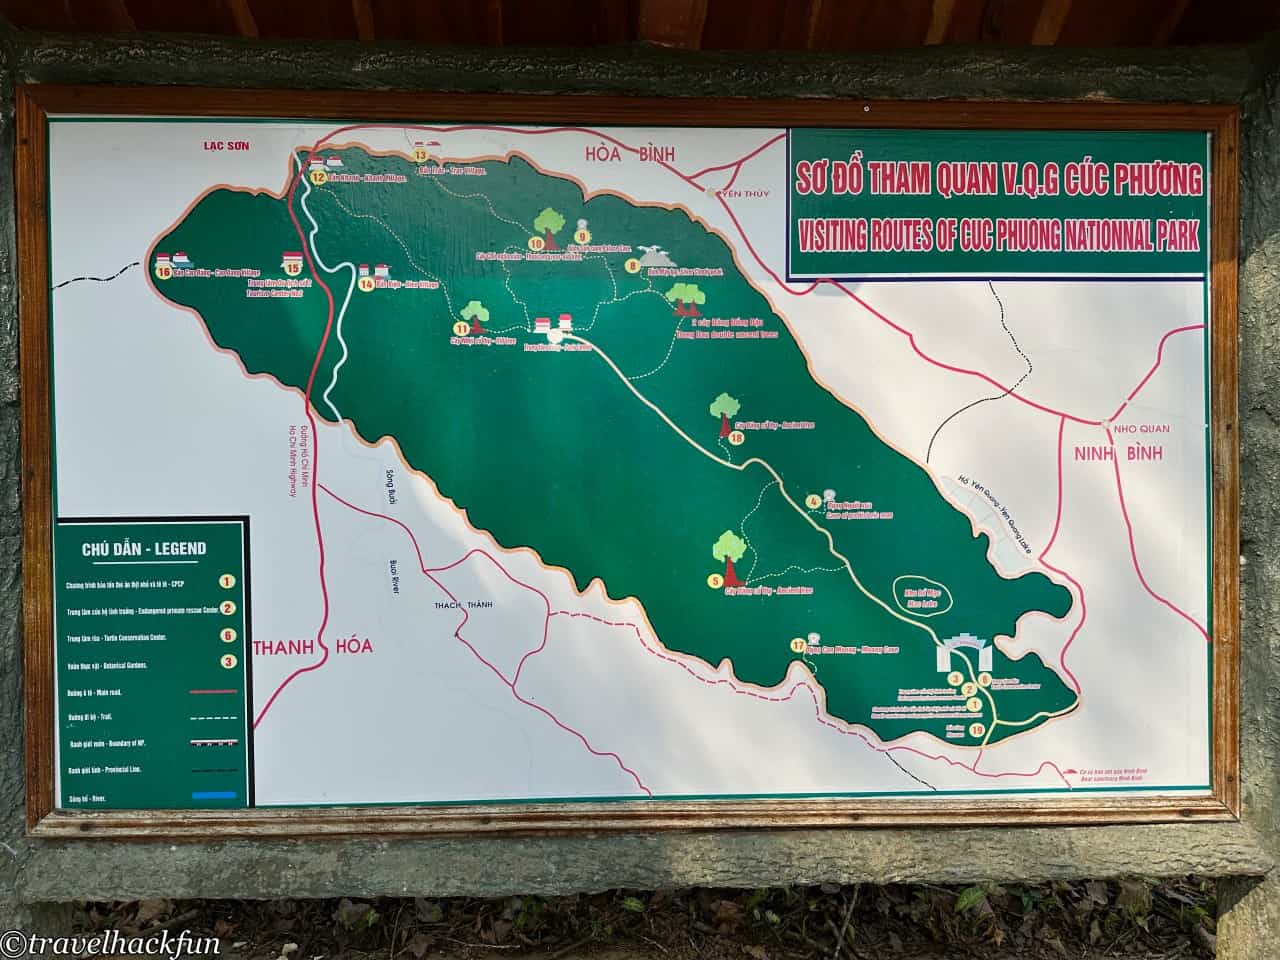 Cuc Phoung Național Park,菊芳國家公園 6